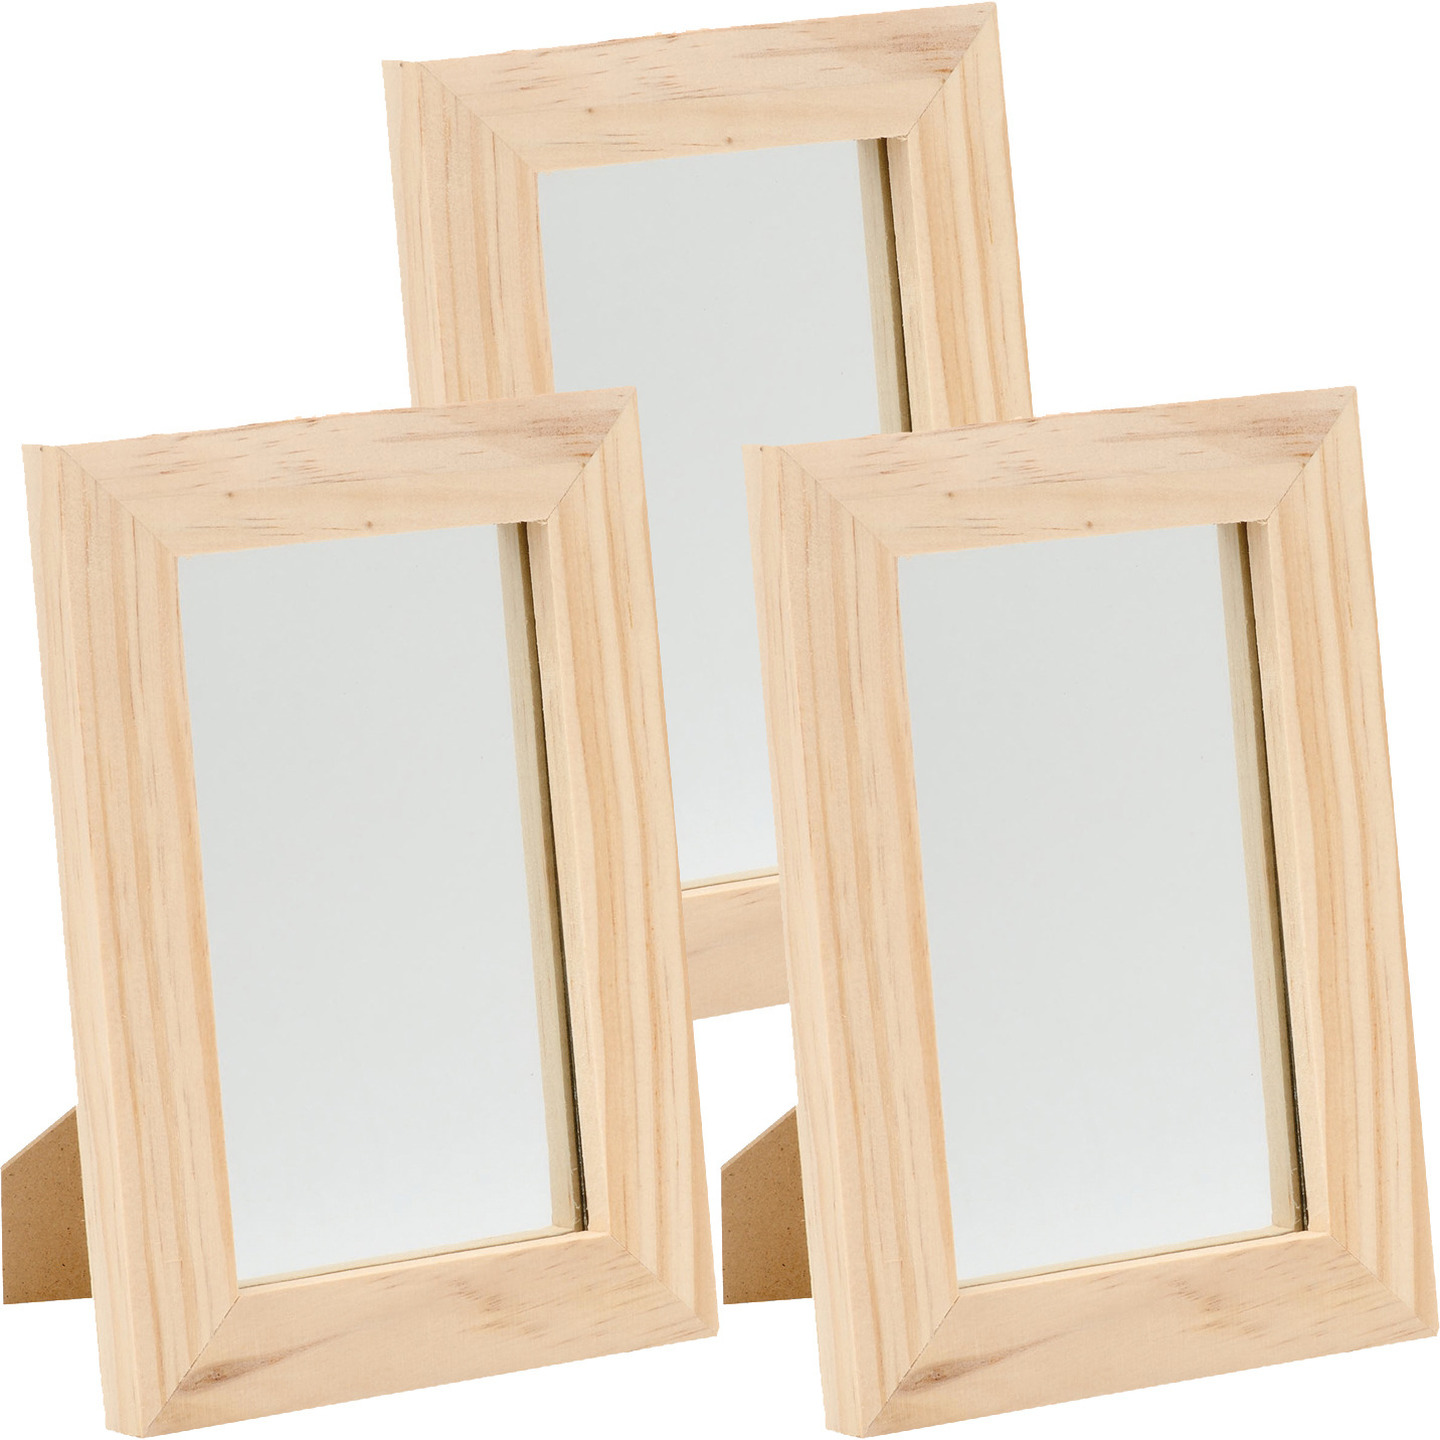 3x Houten spiegels 13,5 x 19,5 cm DIY hobby-knutselmateriaal